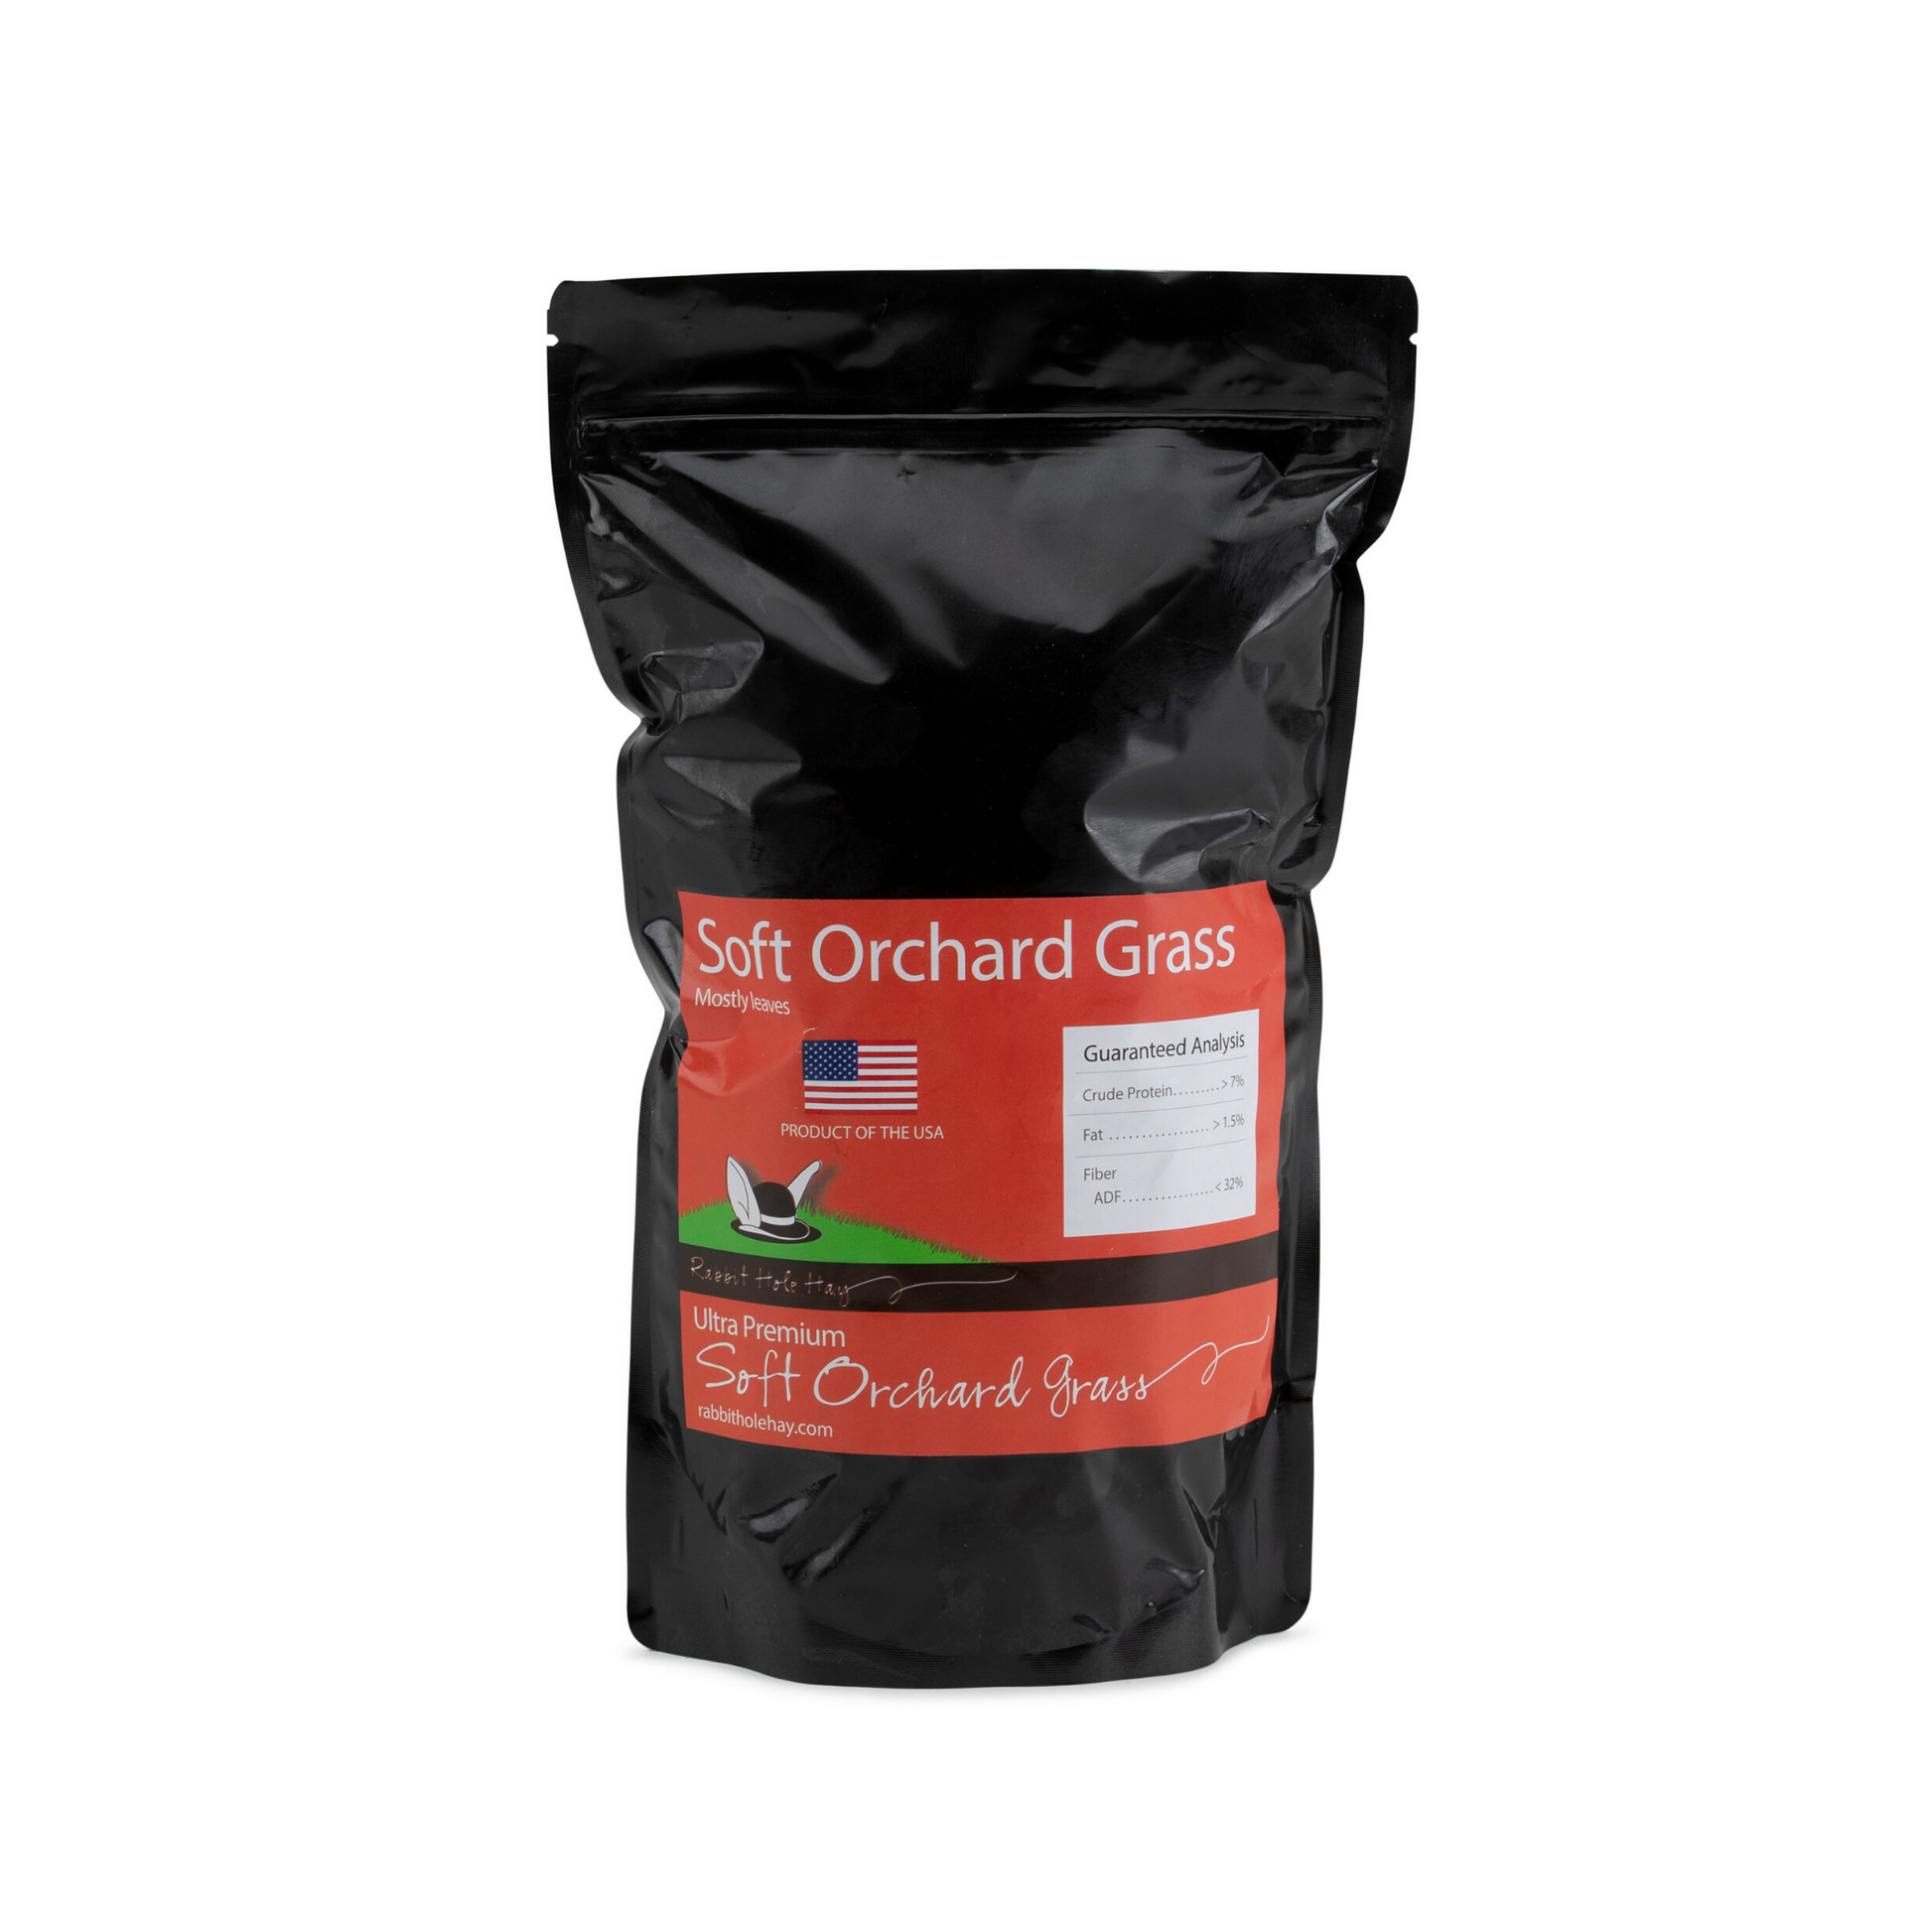 Ultra Premium Soft Orchard Grass - 4oz